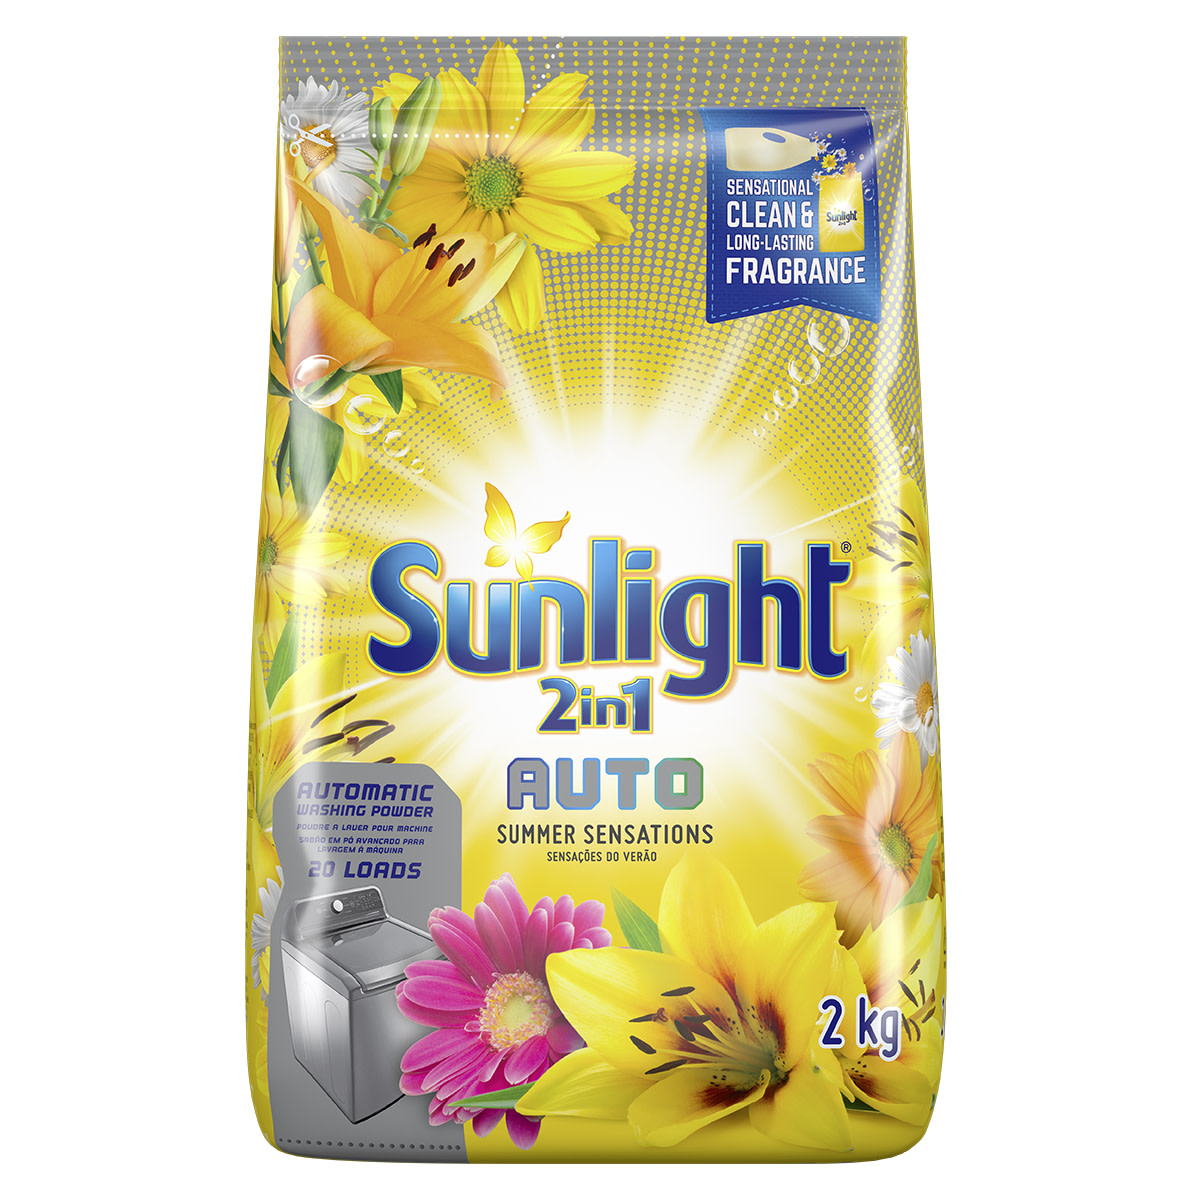 Sunlight 2in1 Spring Sensations Auto Washing Powder